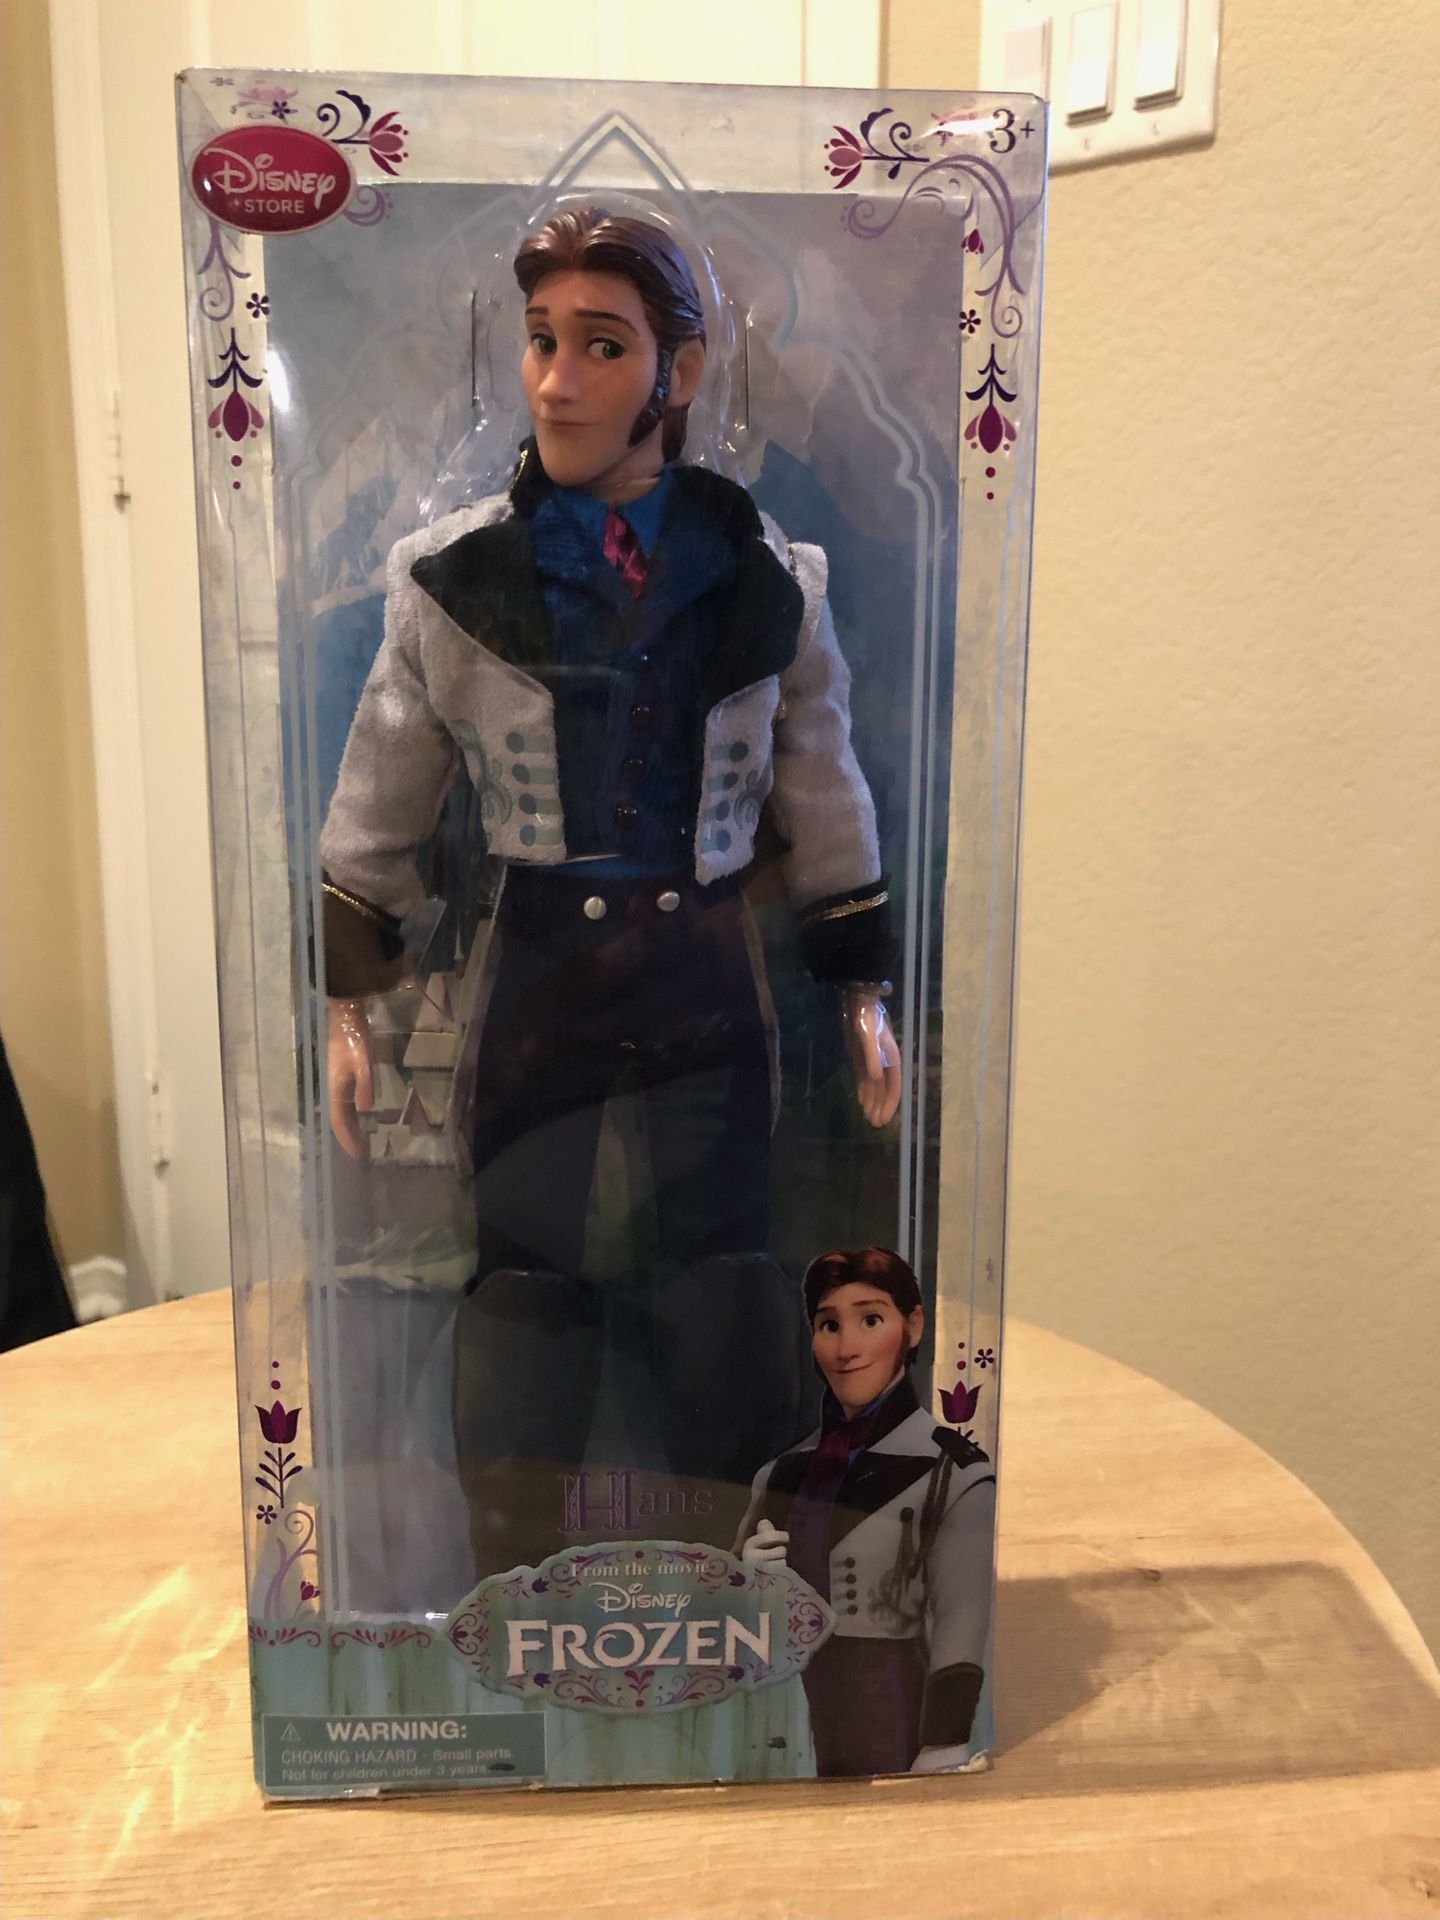 Disneys Frozen Prince Hans Doll